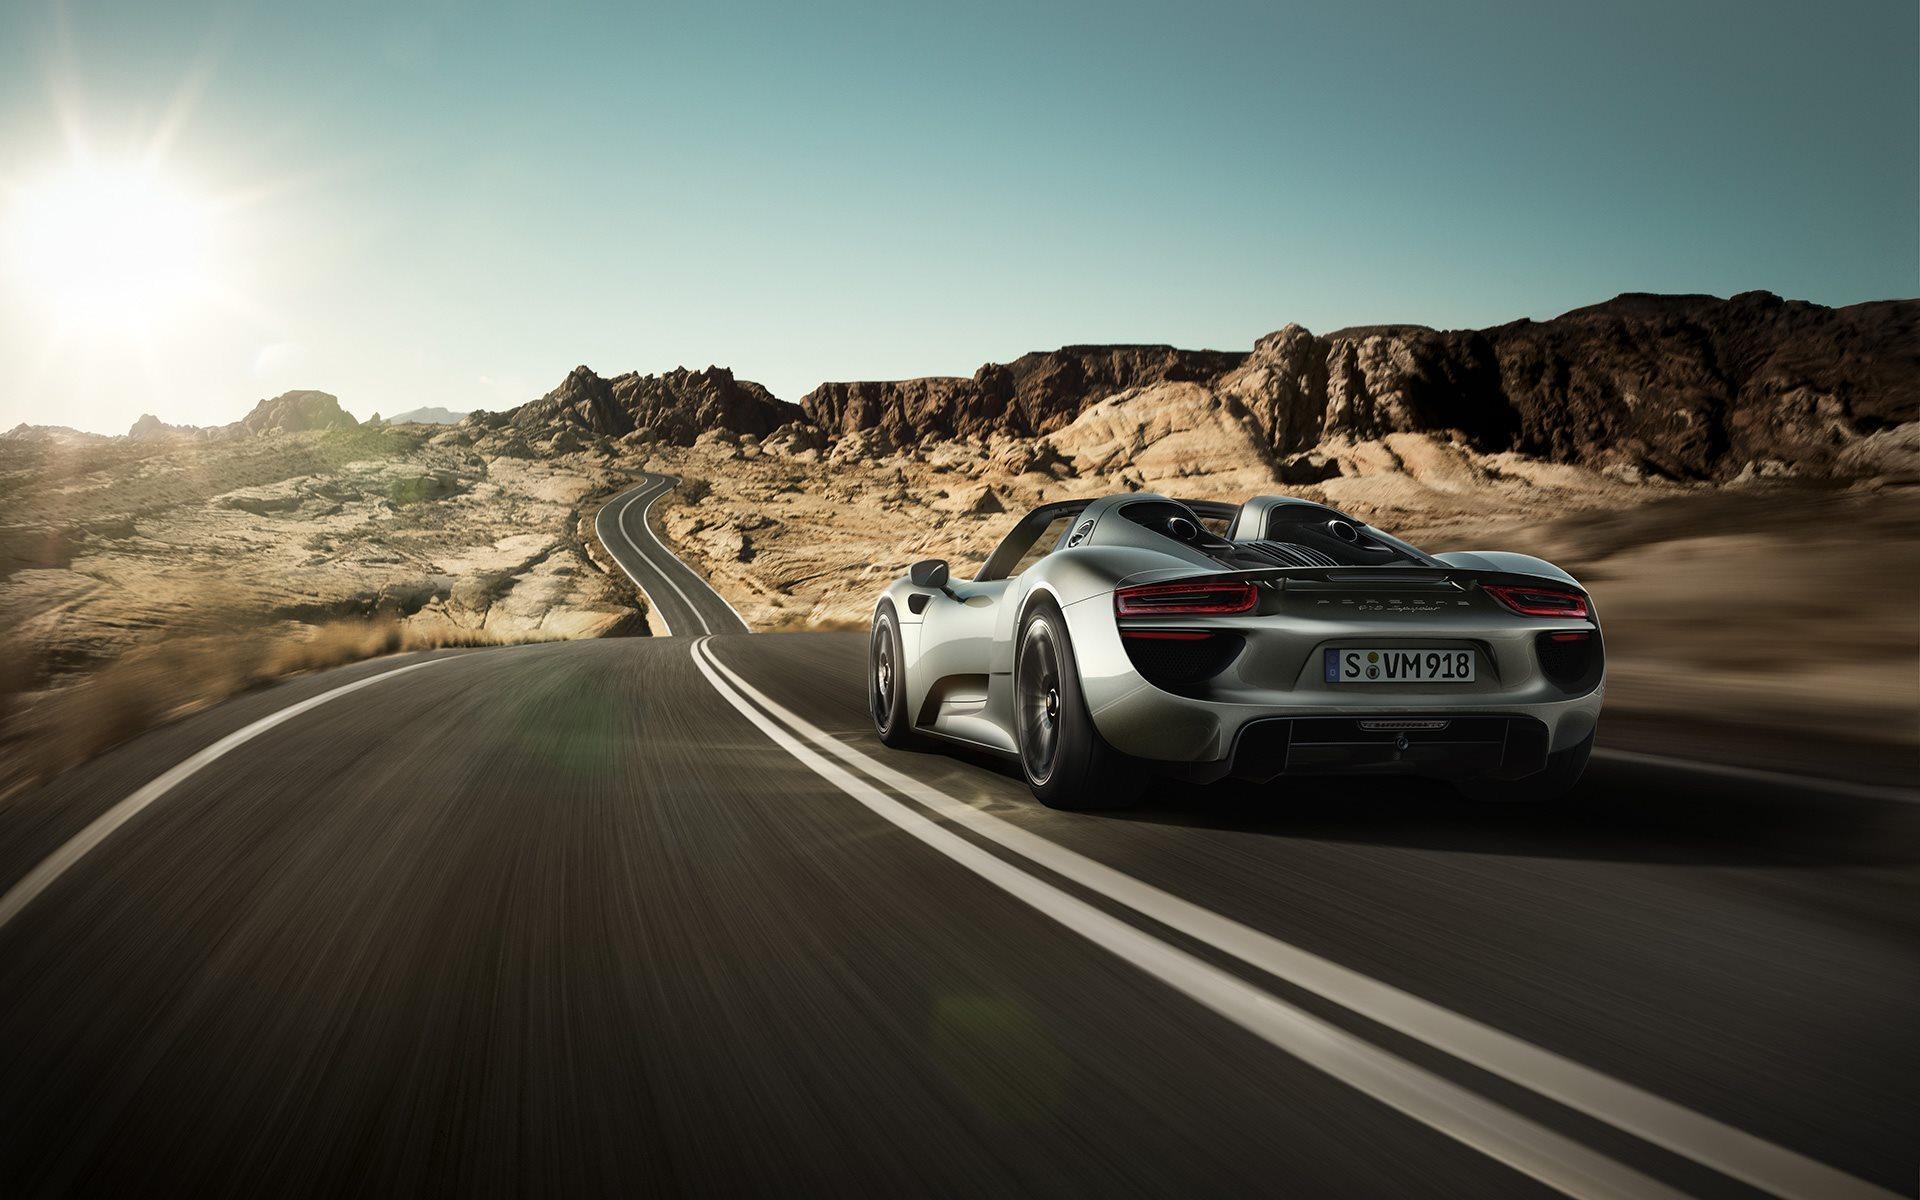 HD Porsche 918 on the desert road Wallpaper. Download Free